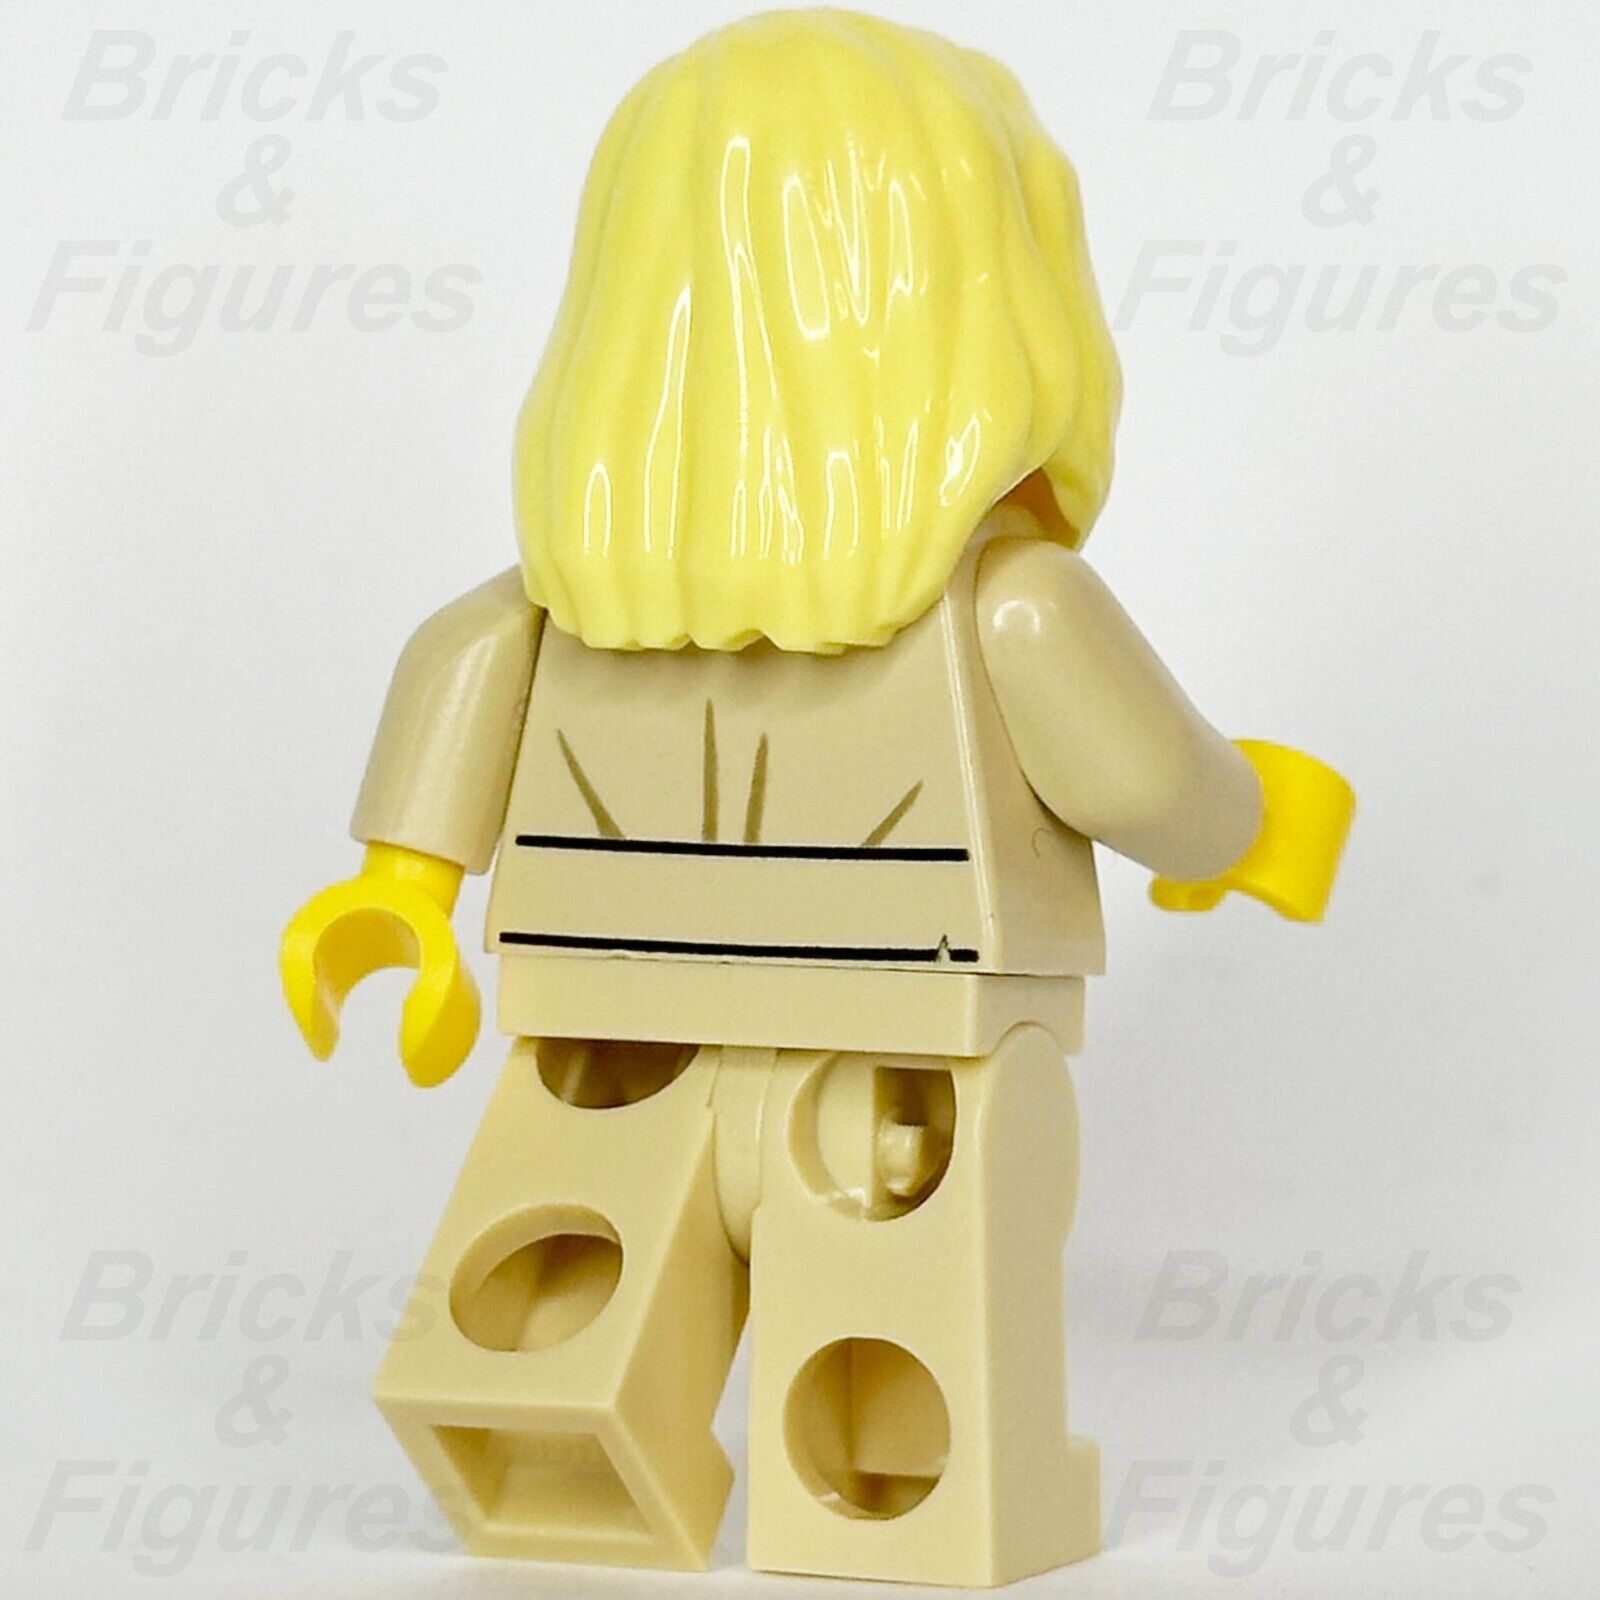 LEGO City Tourist Minifigure Female with Tan Jacket & Glasses 60380 cty1654